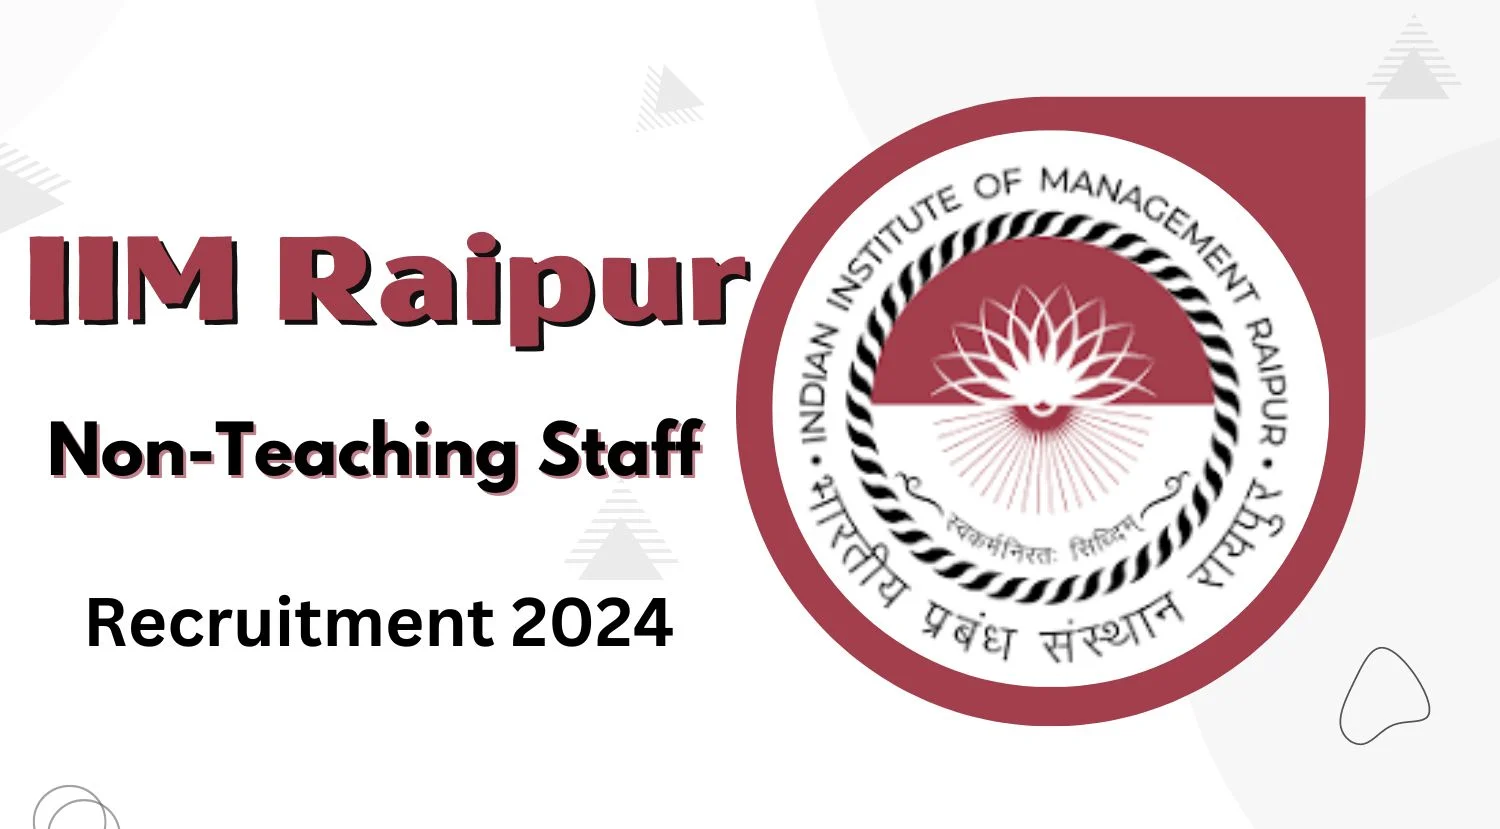 IIM Raipur Non-Teaching Staff Recruitment 2024